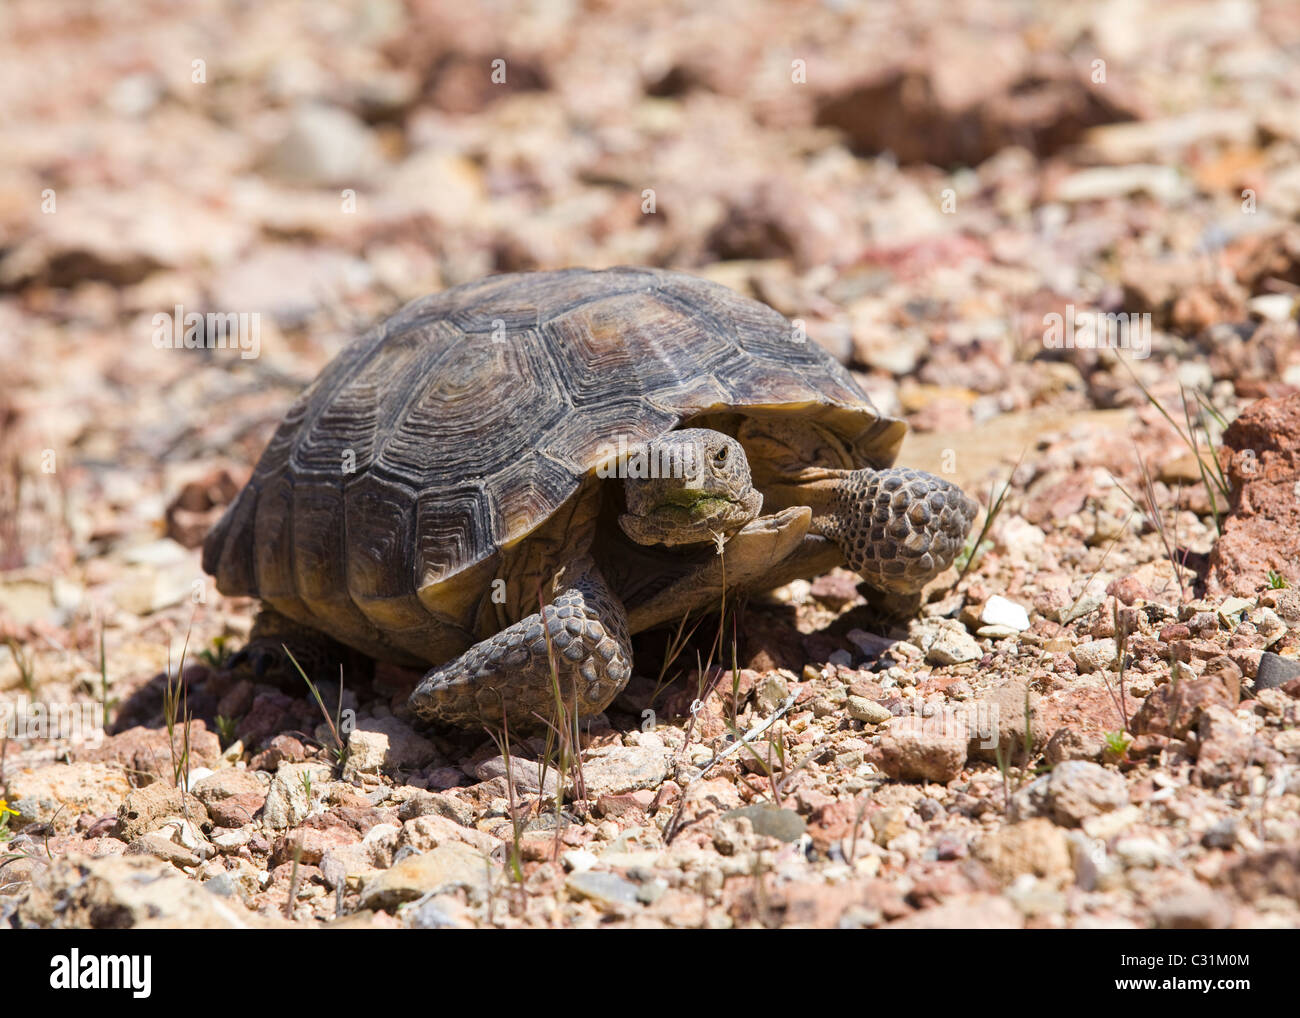 Mojave desert tortoise (Gopherus agassizii) in its natural habitat - Mojave, California USA Stock Photo